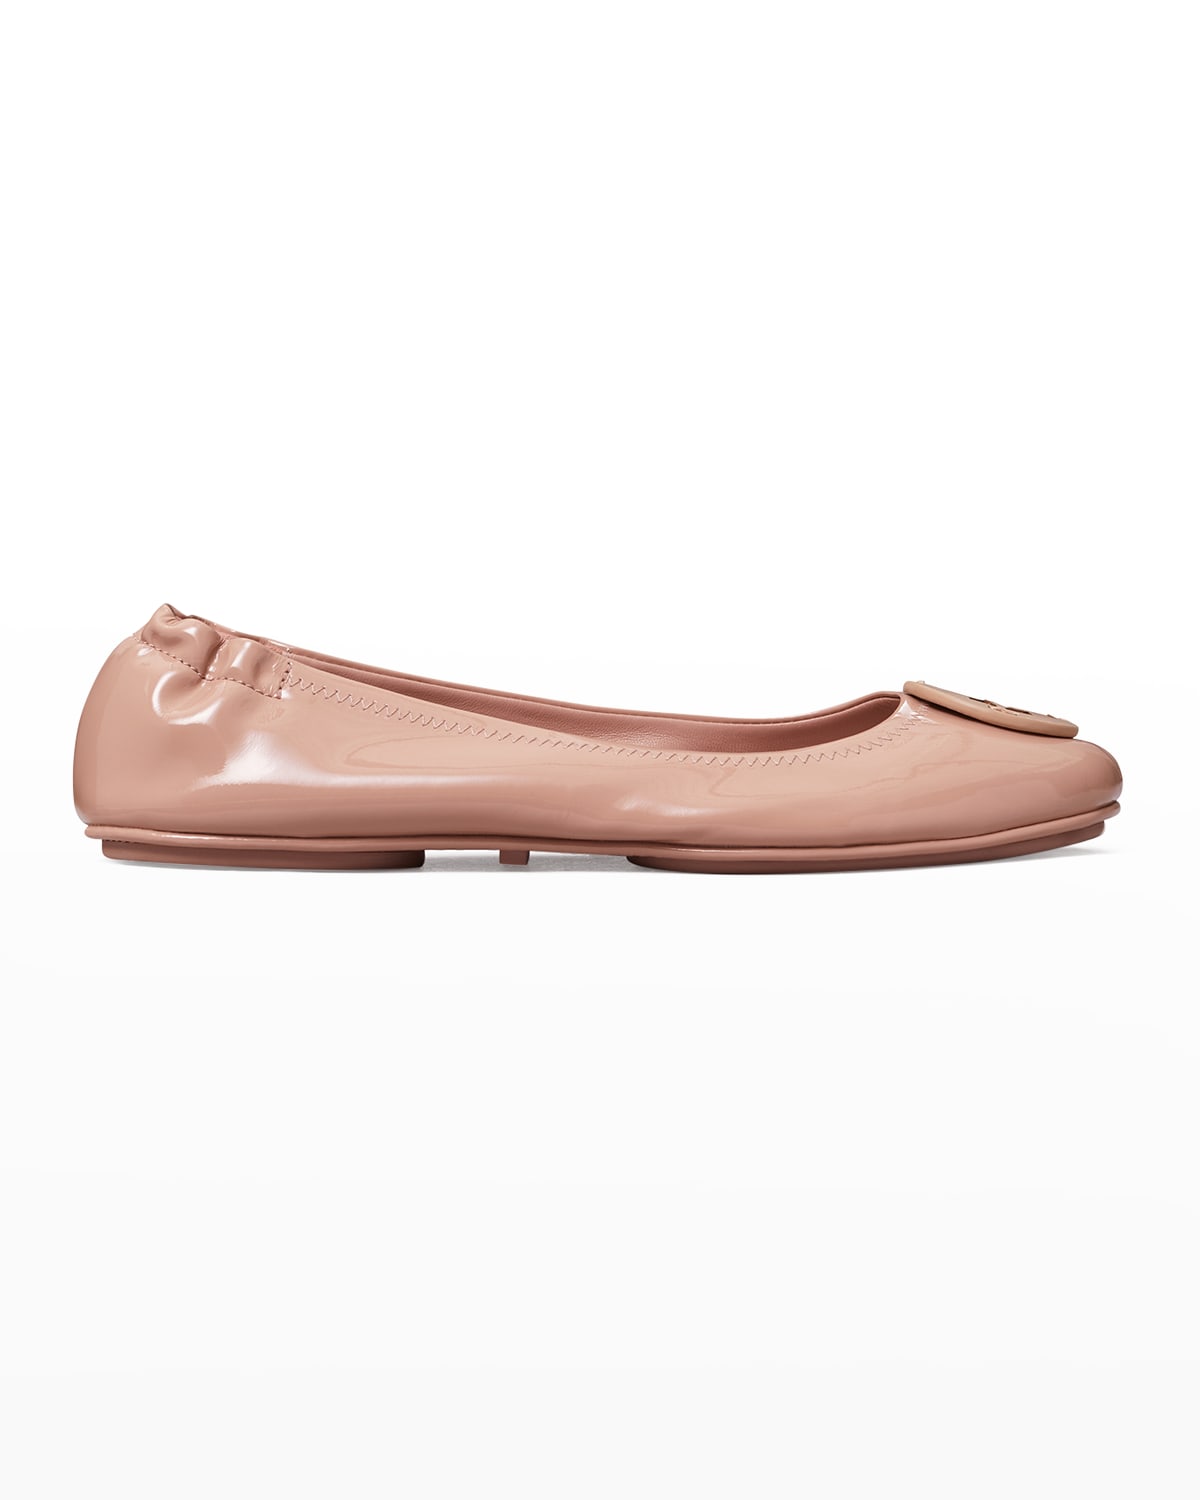 Tory Burch Sandal Shoes | Neiman Marcus